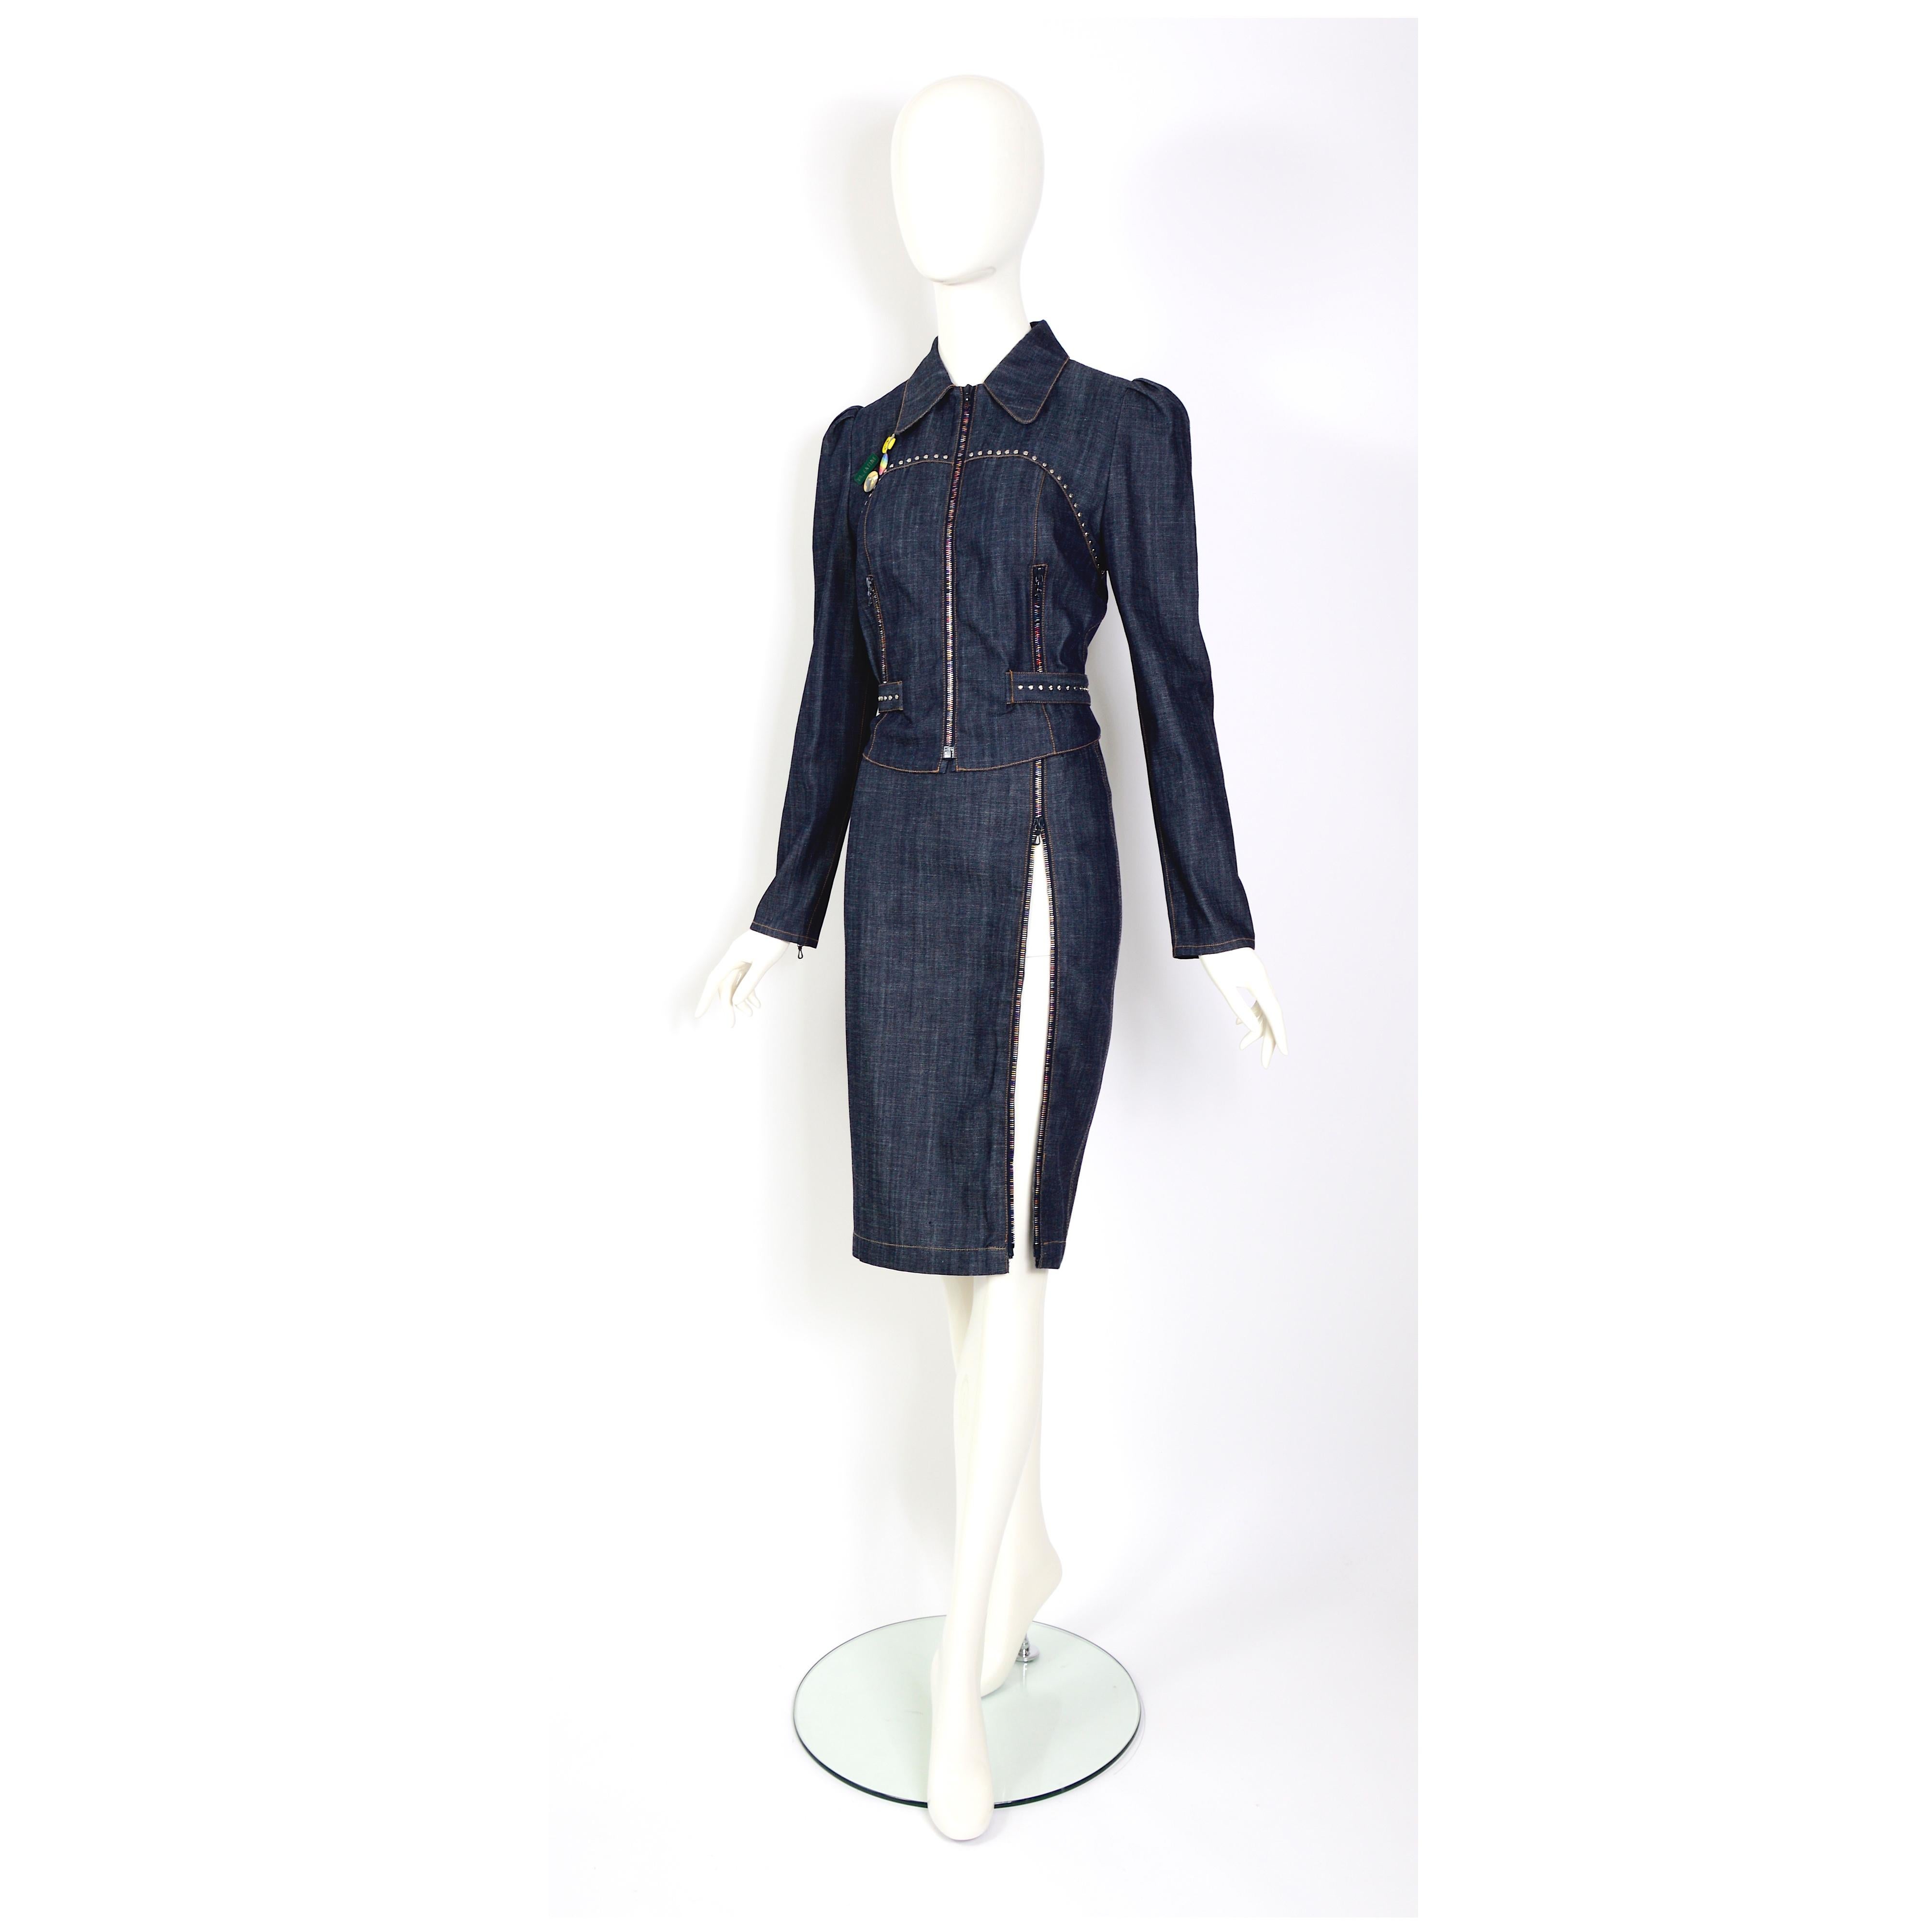 Chloé by Stella McCartney vintage 2001 denim jacket and skirt set For Sale 3